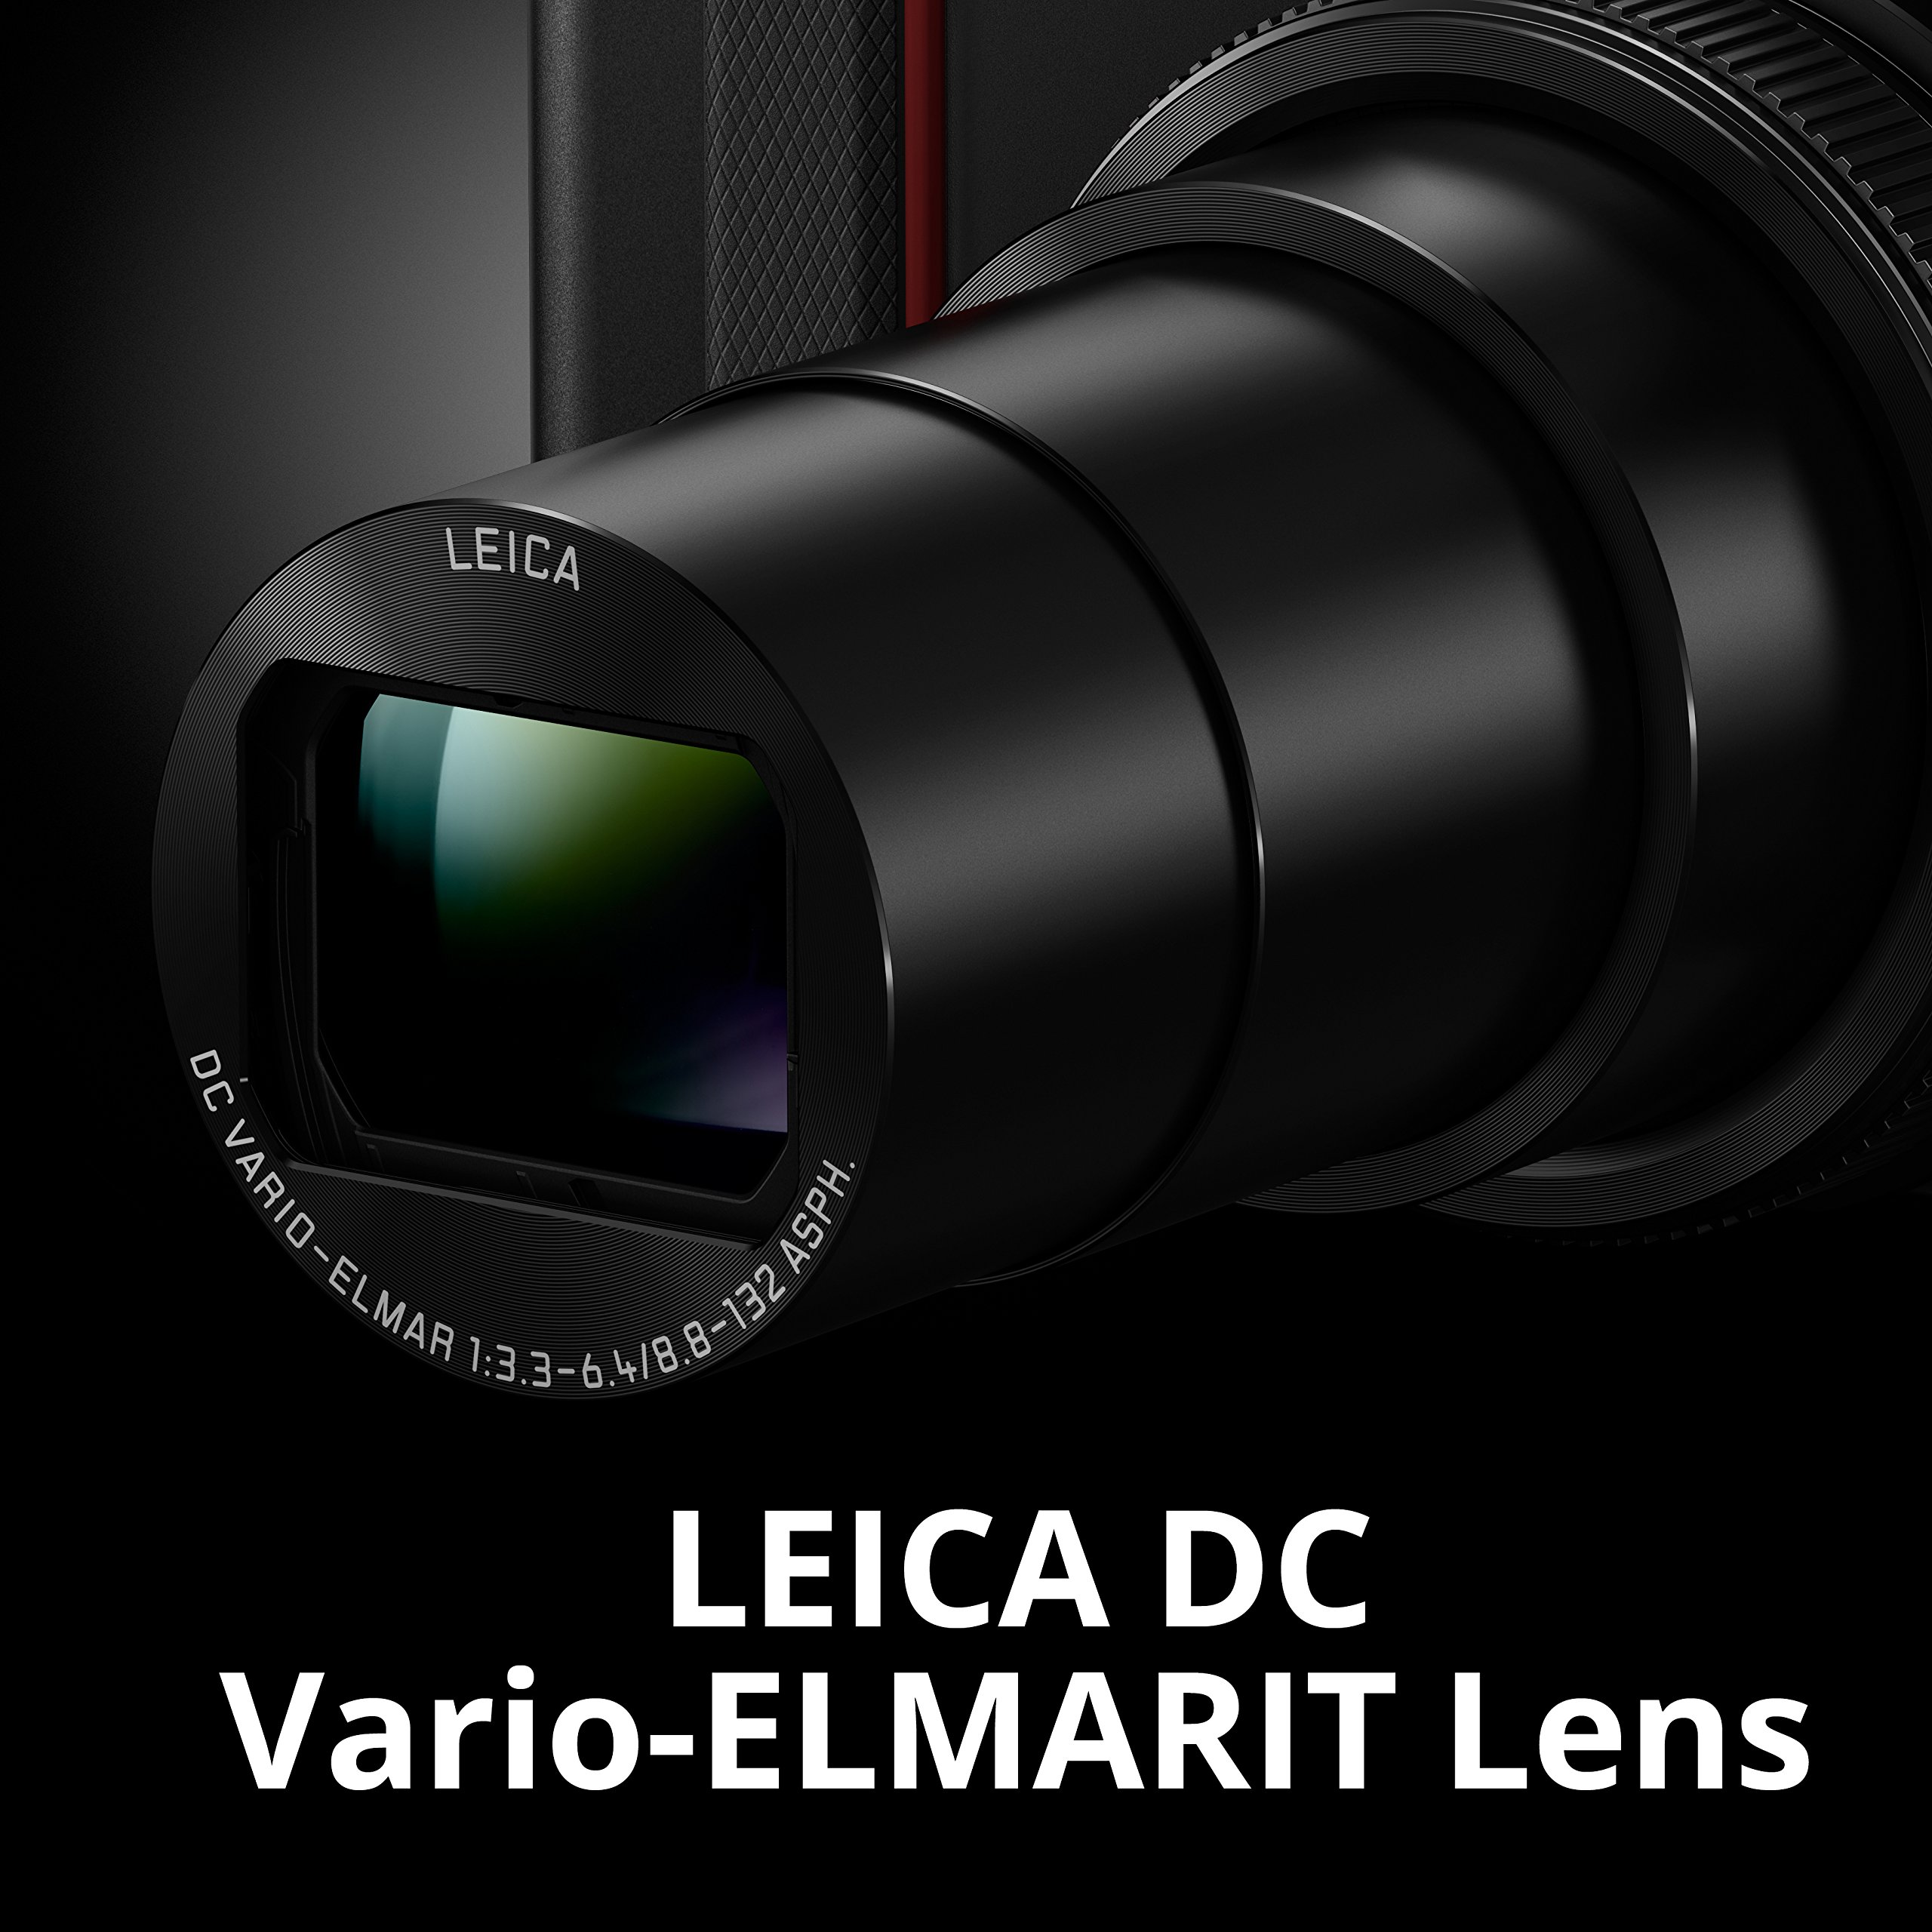 PANASONIC LUMIX ZS200 4K Digital Camera, DC-ZS200K, 20.1 Megapixel 1-Inch Sensor, 15X LEICA DC VARIO-ELMAR Lens, F3.3-6.4 Aperture, HYBRID O.I.S. Stabilization, 3-Inch LCD , DC-ZS200K (Black)